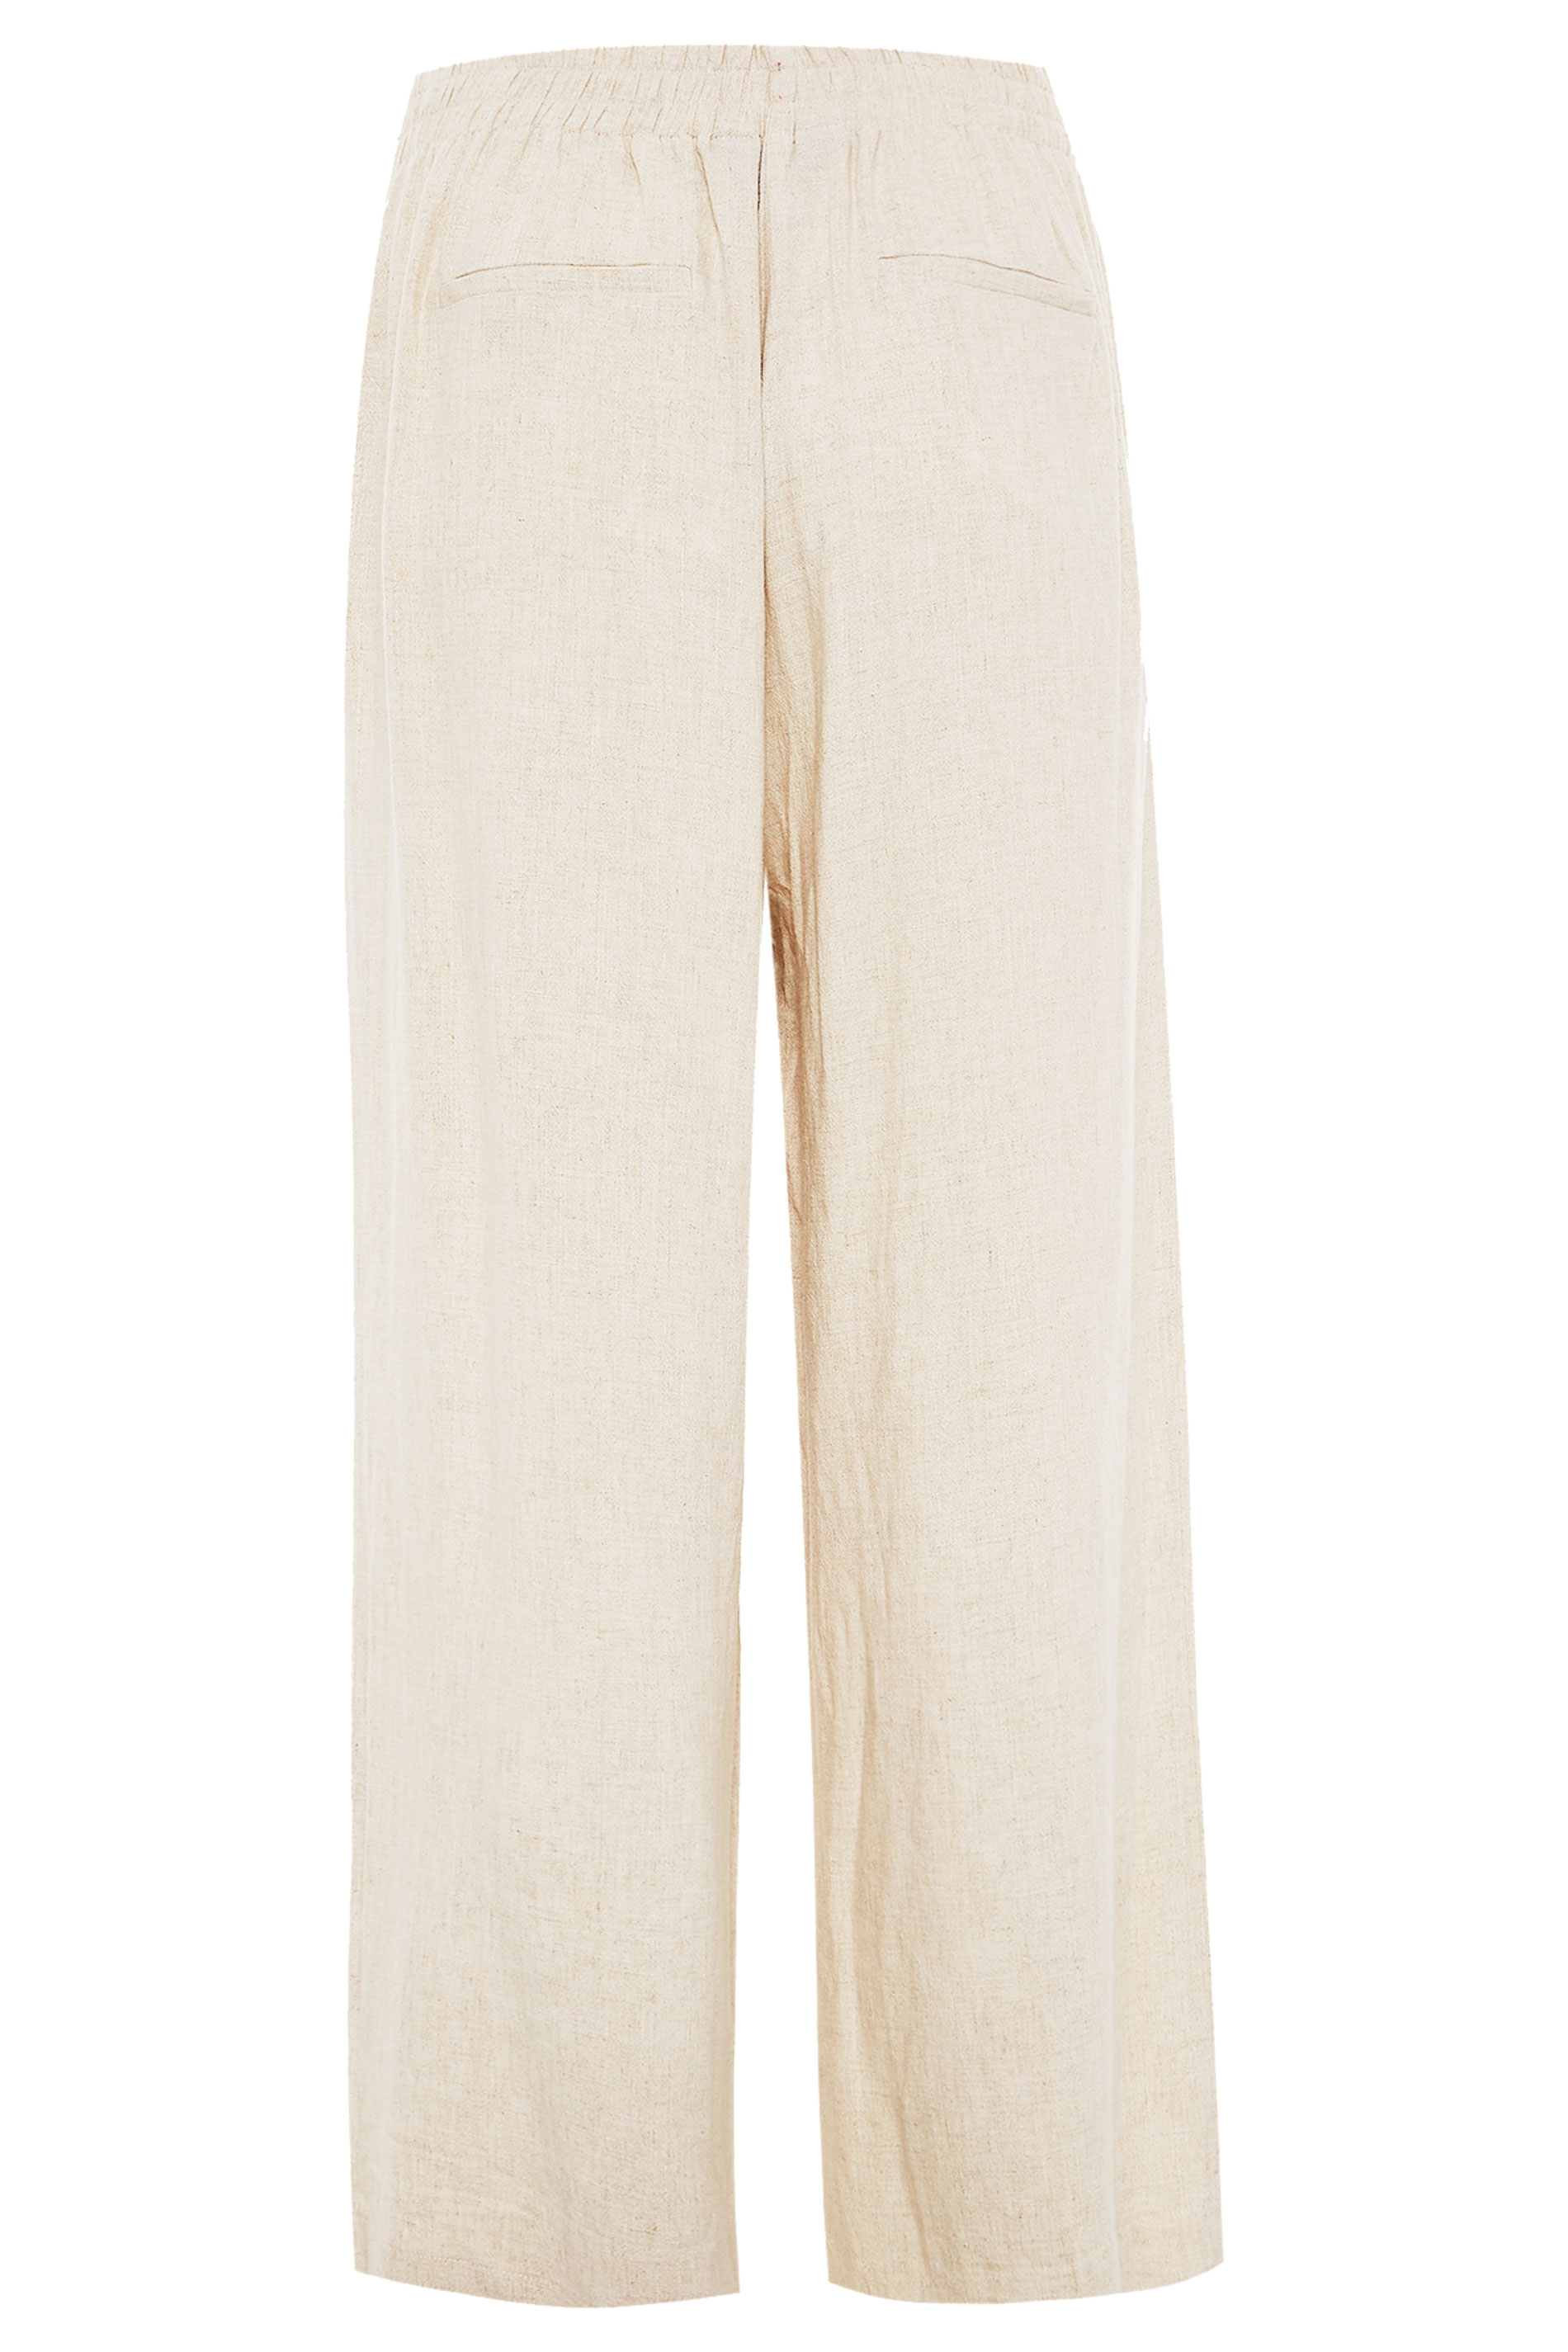 LTS Cream Linen Mix Shirred Waist Cropped Trousers | Long Tall Sally